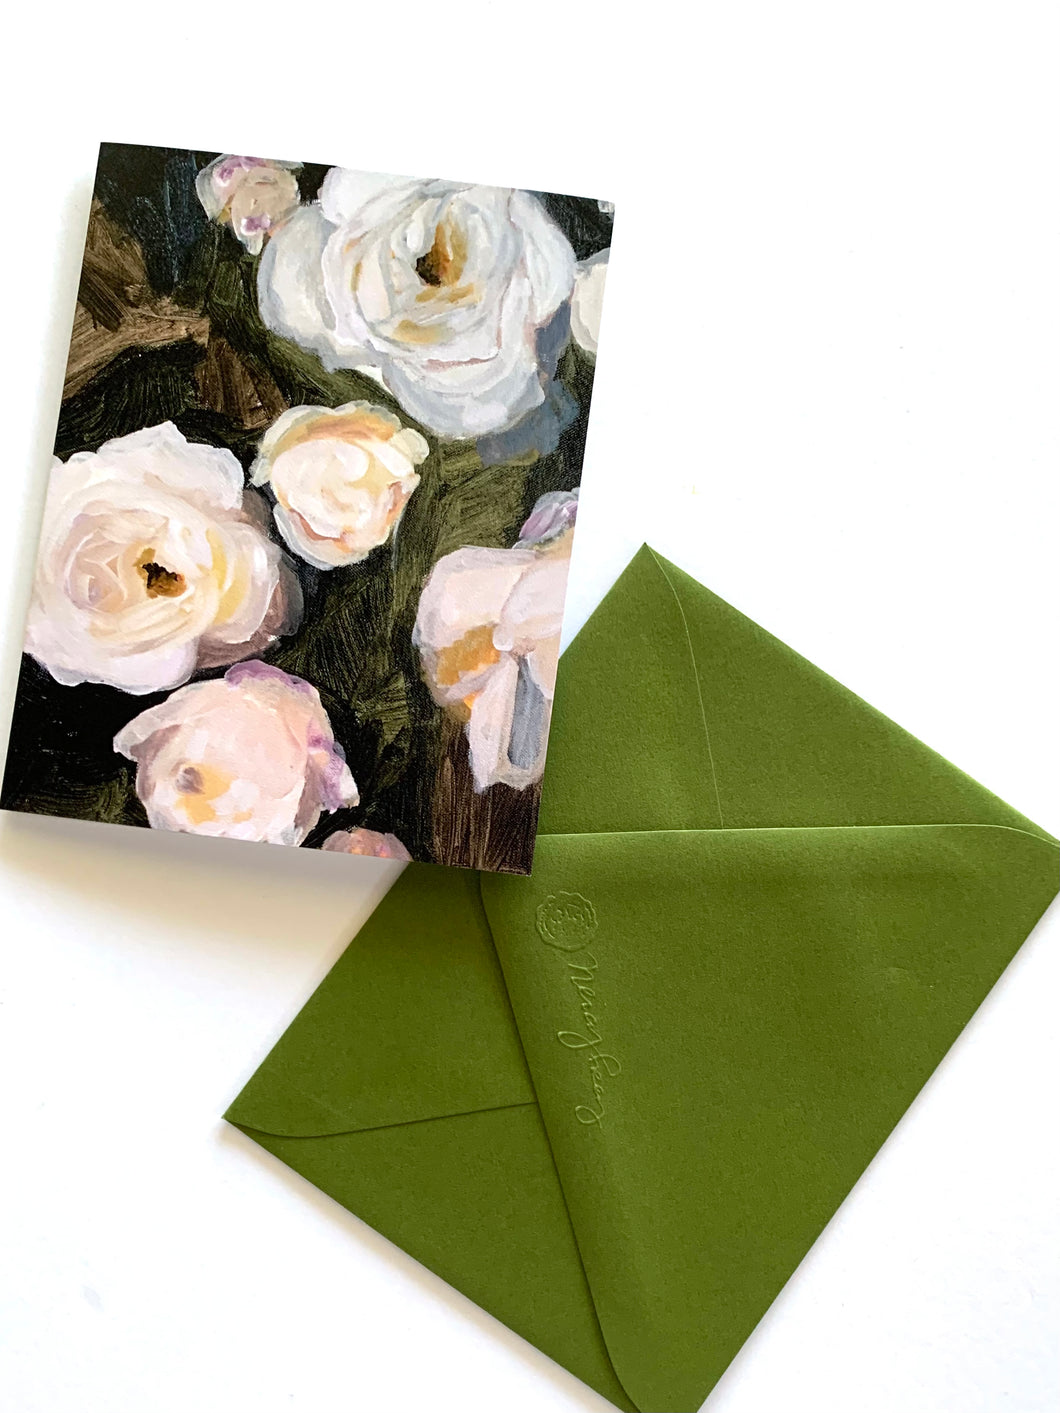 NF GC 042  /  Vintage Tea Roses Greeting Card